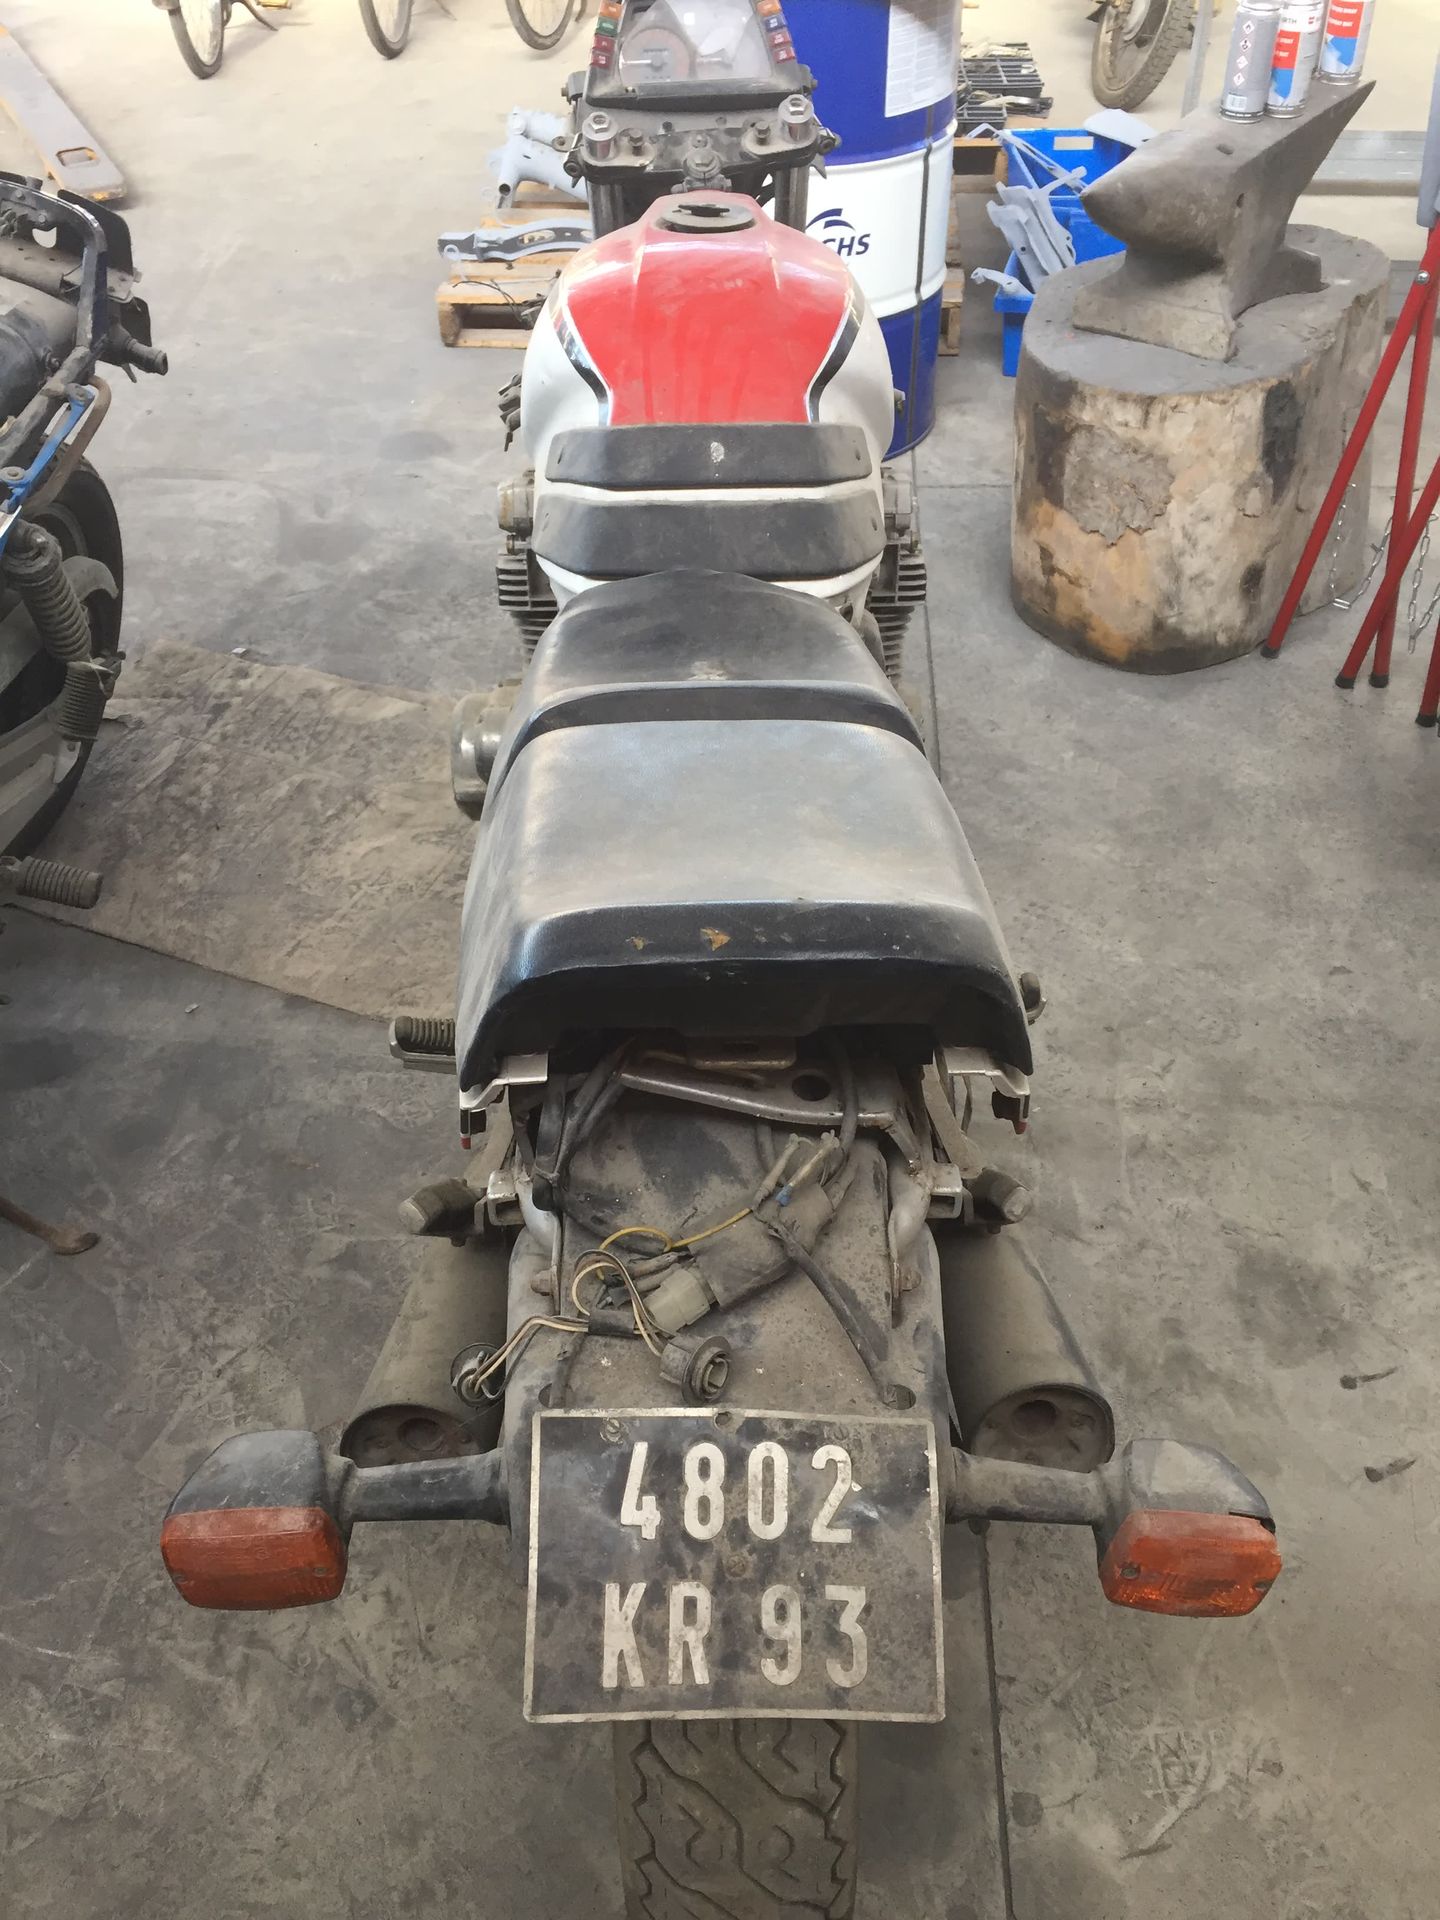 2 motos Suzuki GSX 1100 编号524298，注册号9868 SY 67

一个编号为713-102398，注册号为4802 KR 93

&hellip;